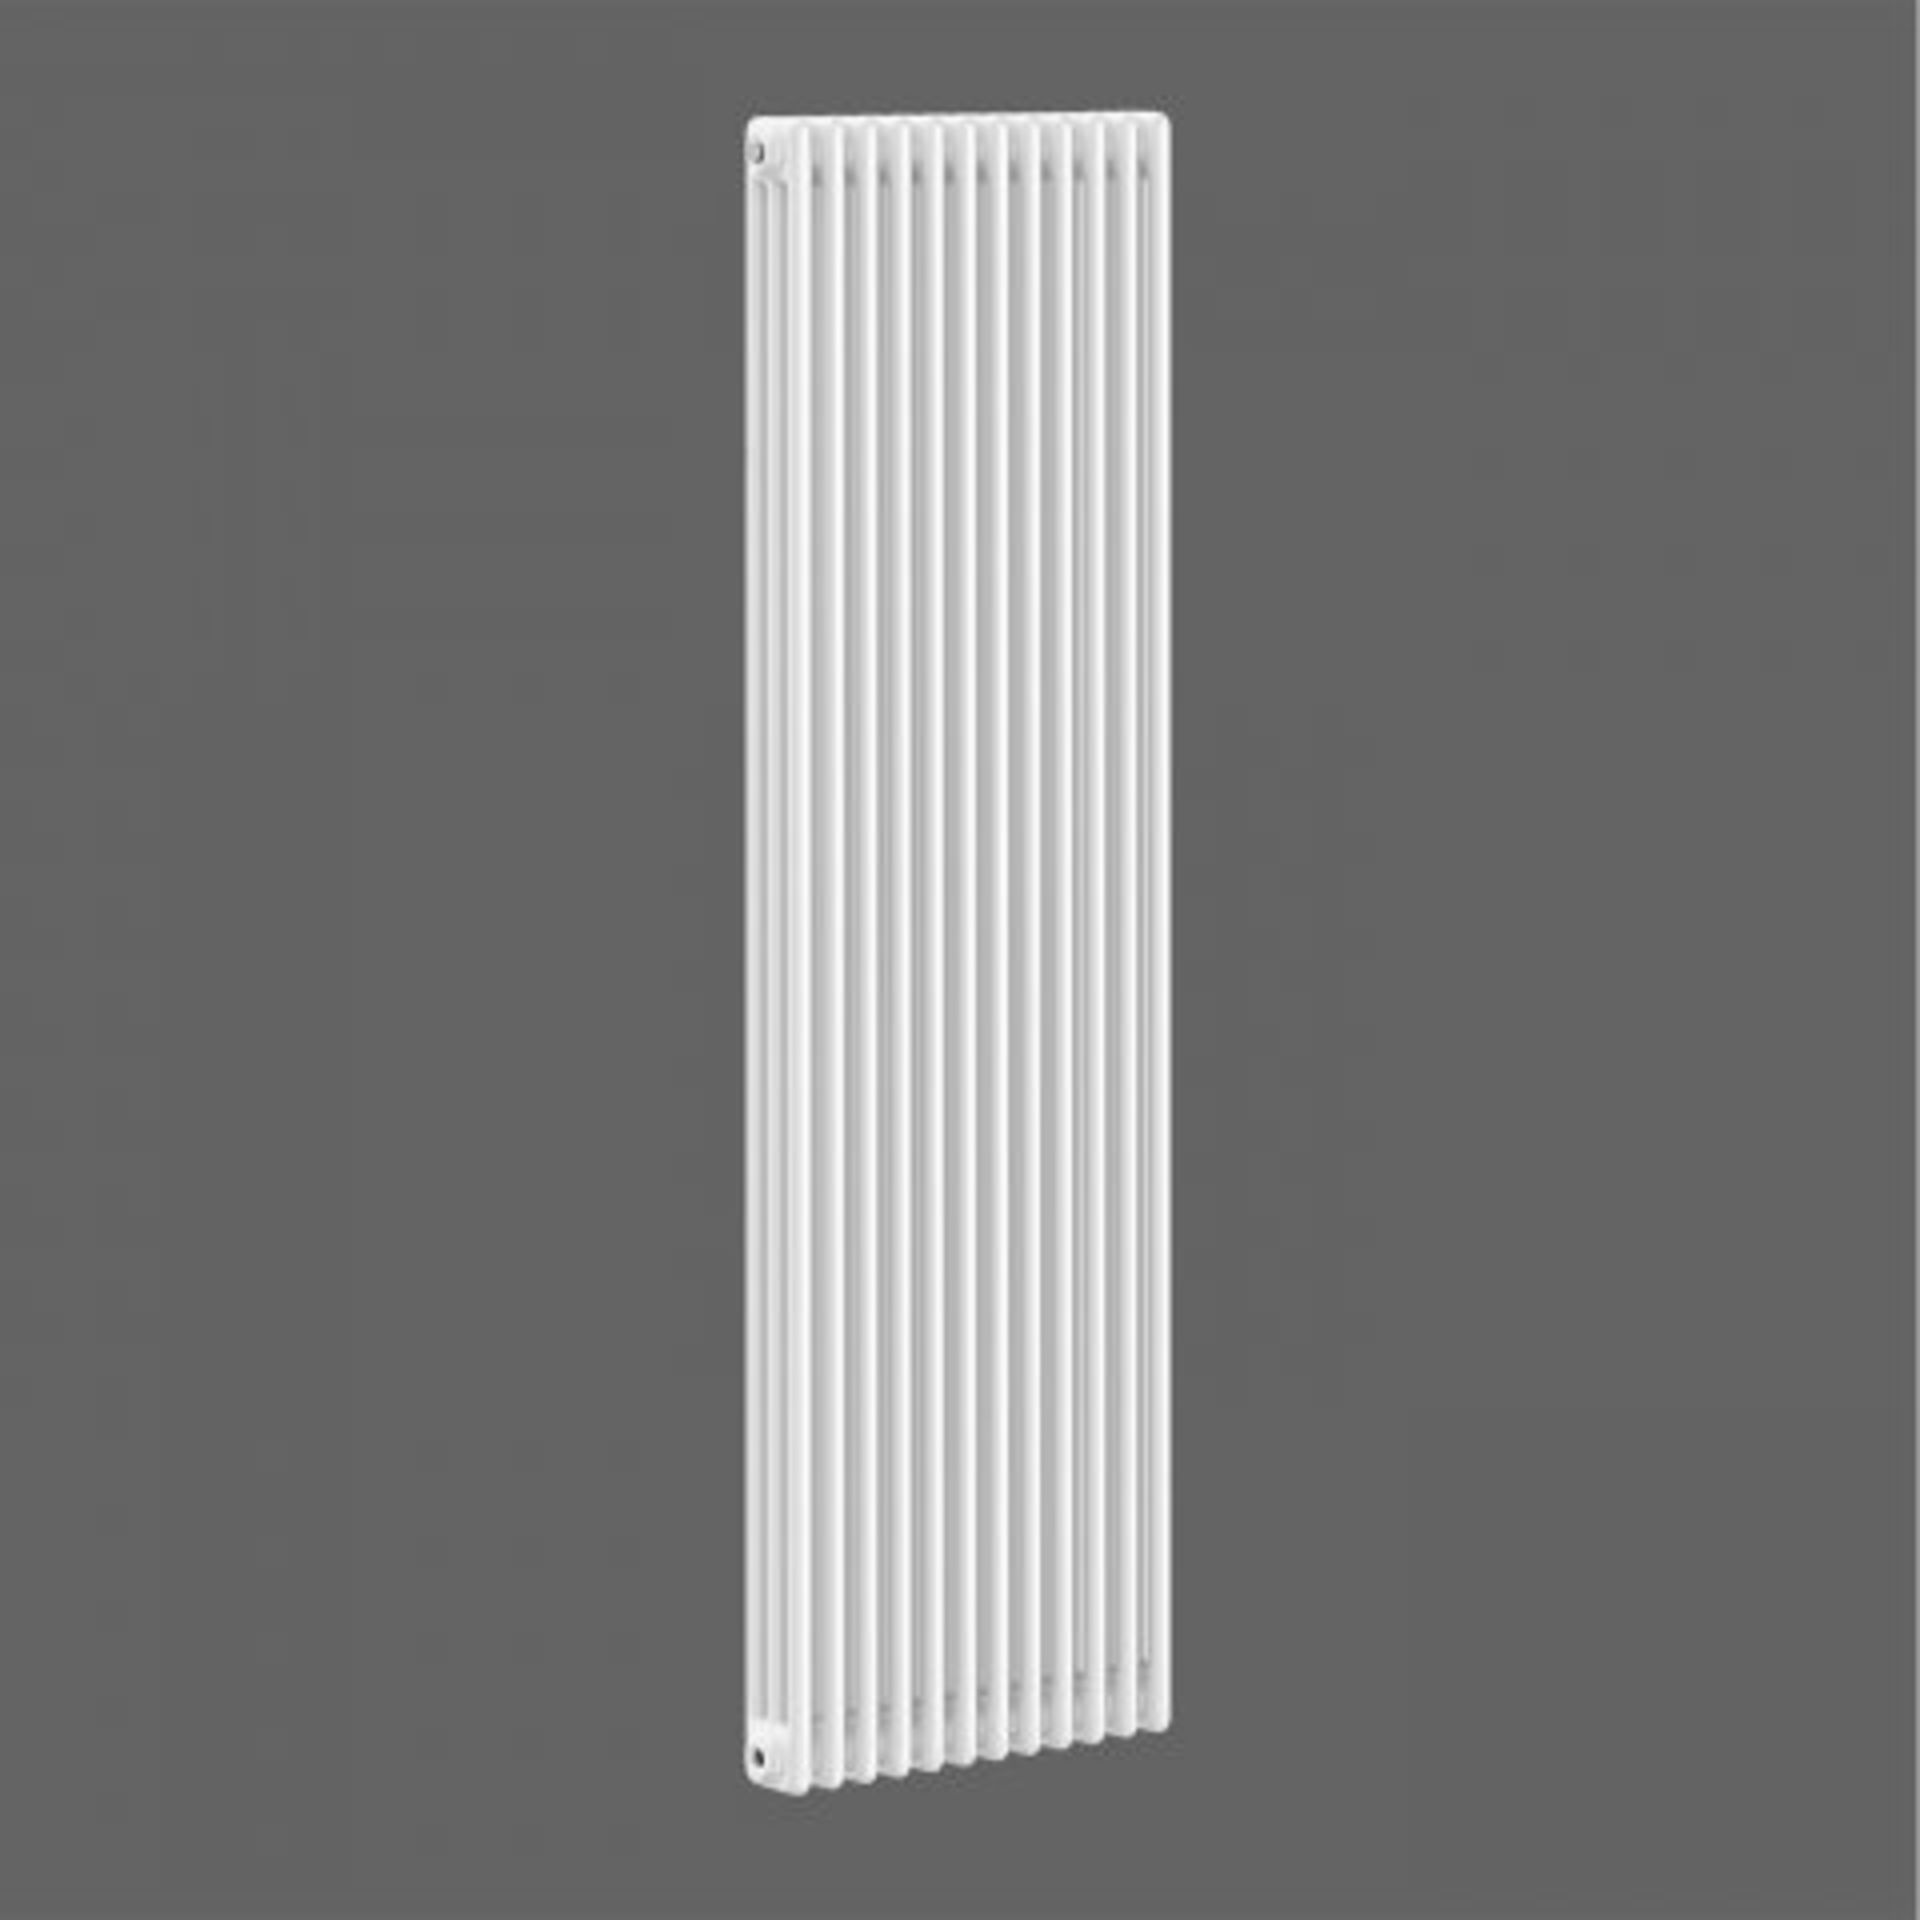 (K347) 1800x554mm White Triple Panel Vertical Colosseum Radiator - Roma Premium. RRP £599.99. - Image 2 of 3